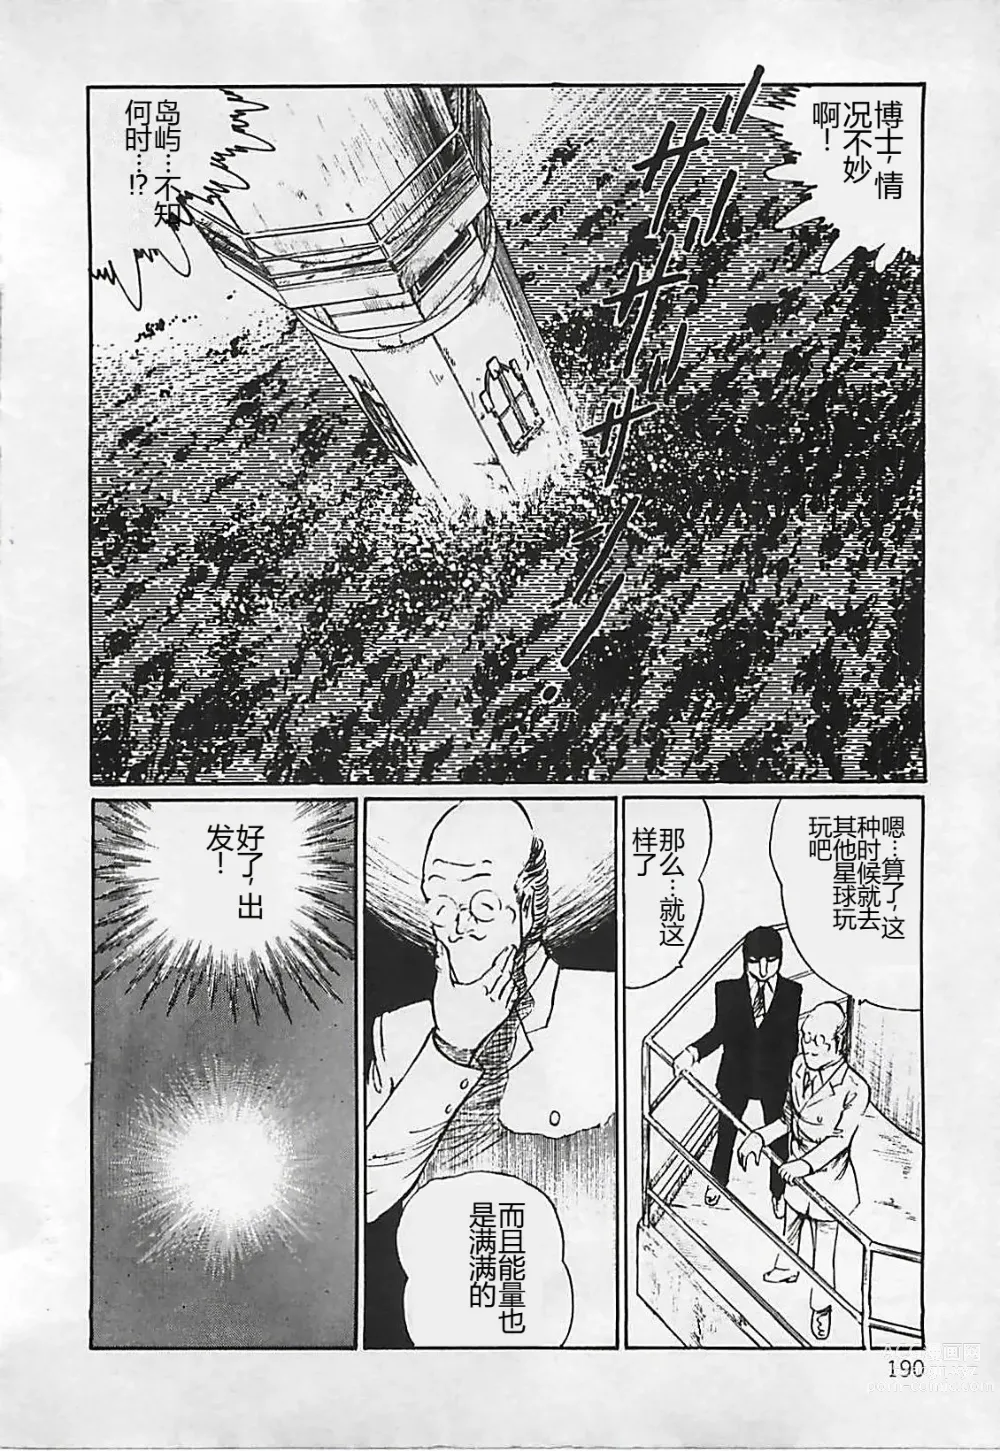 Page 191 of manga Chi no Butou